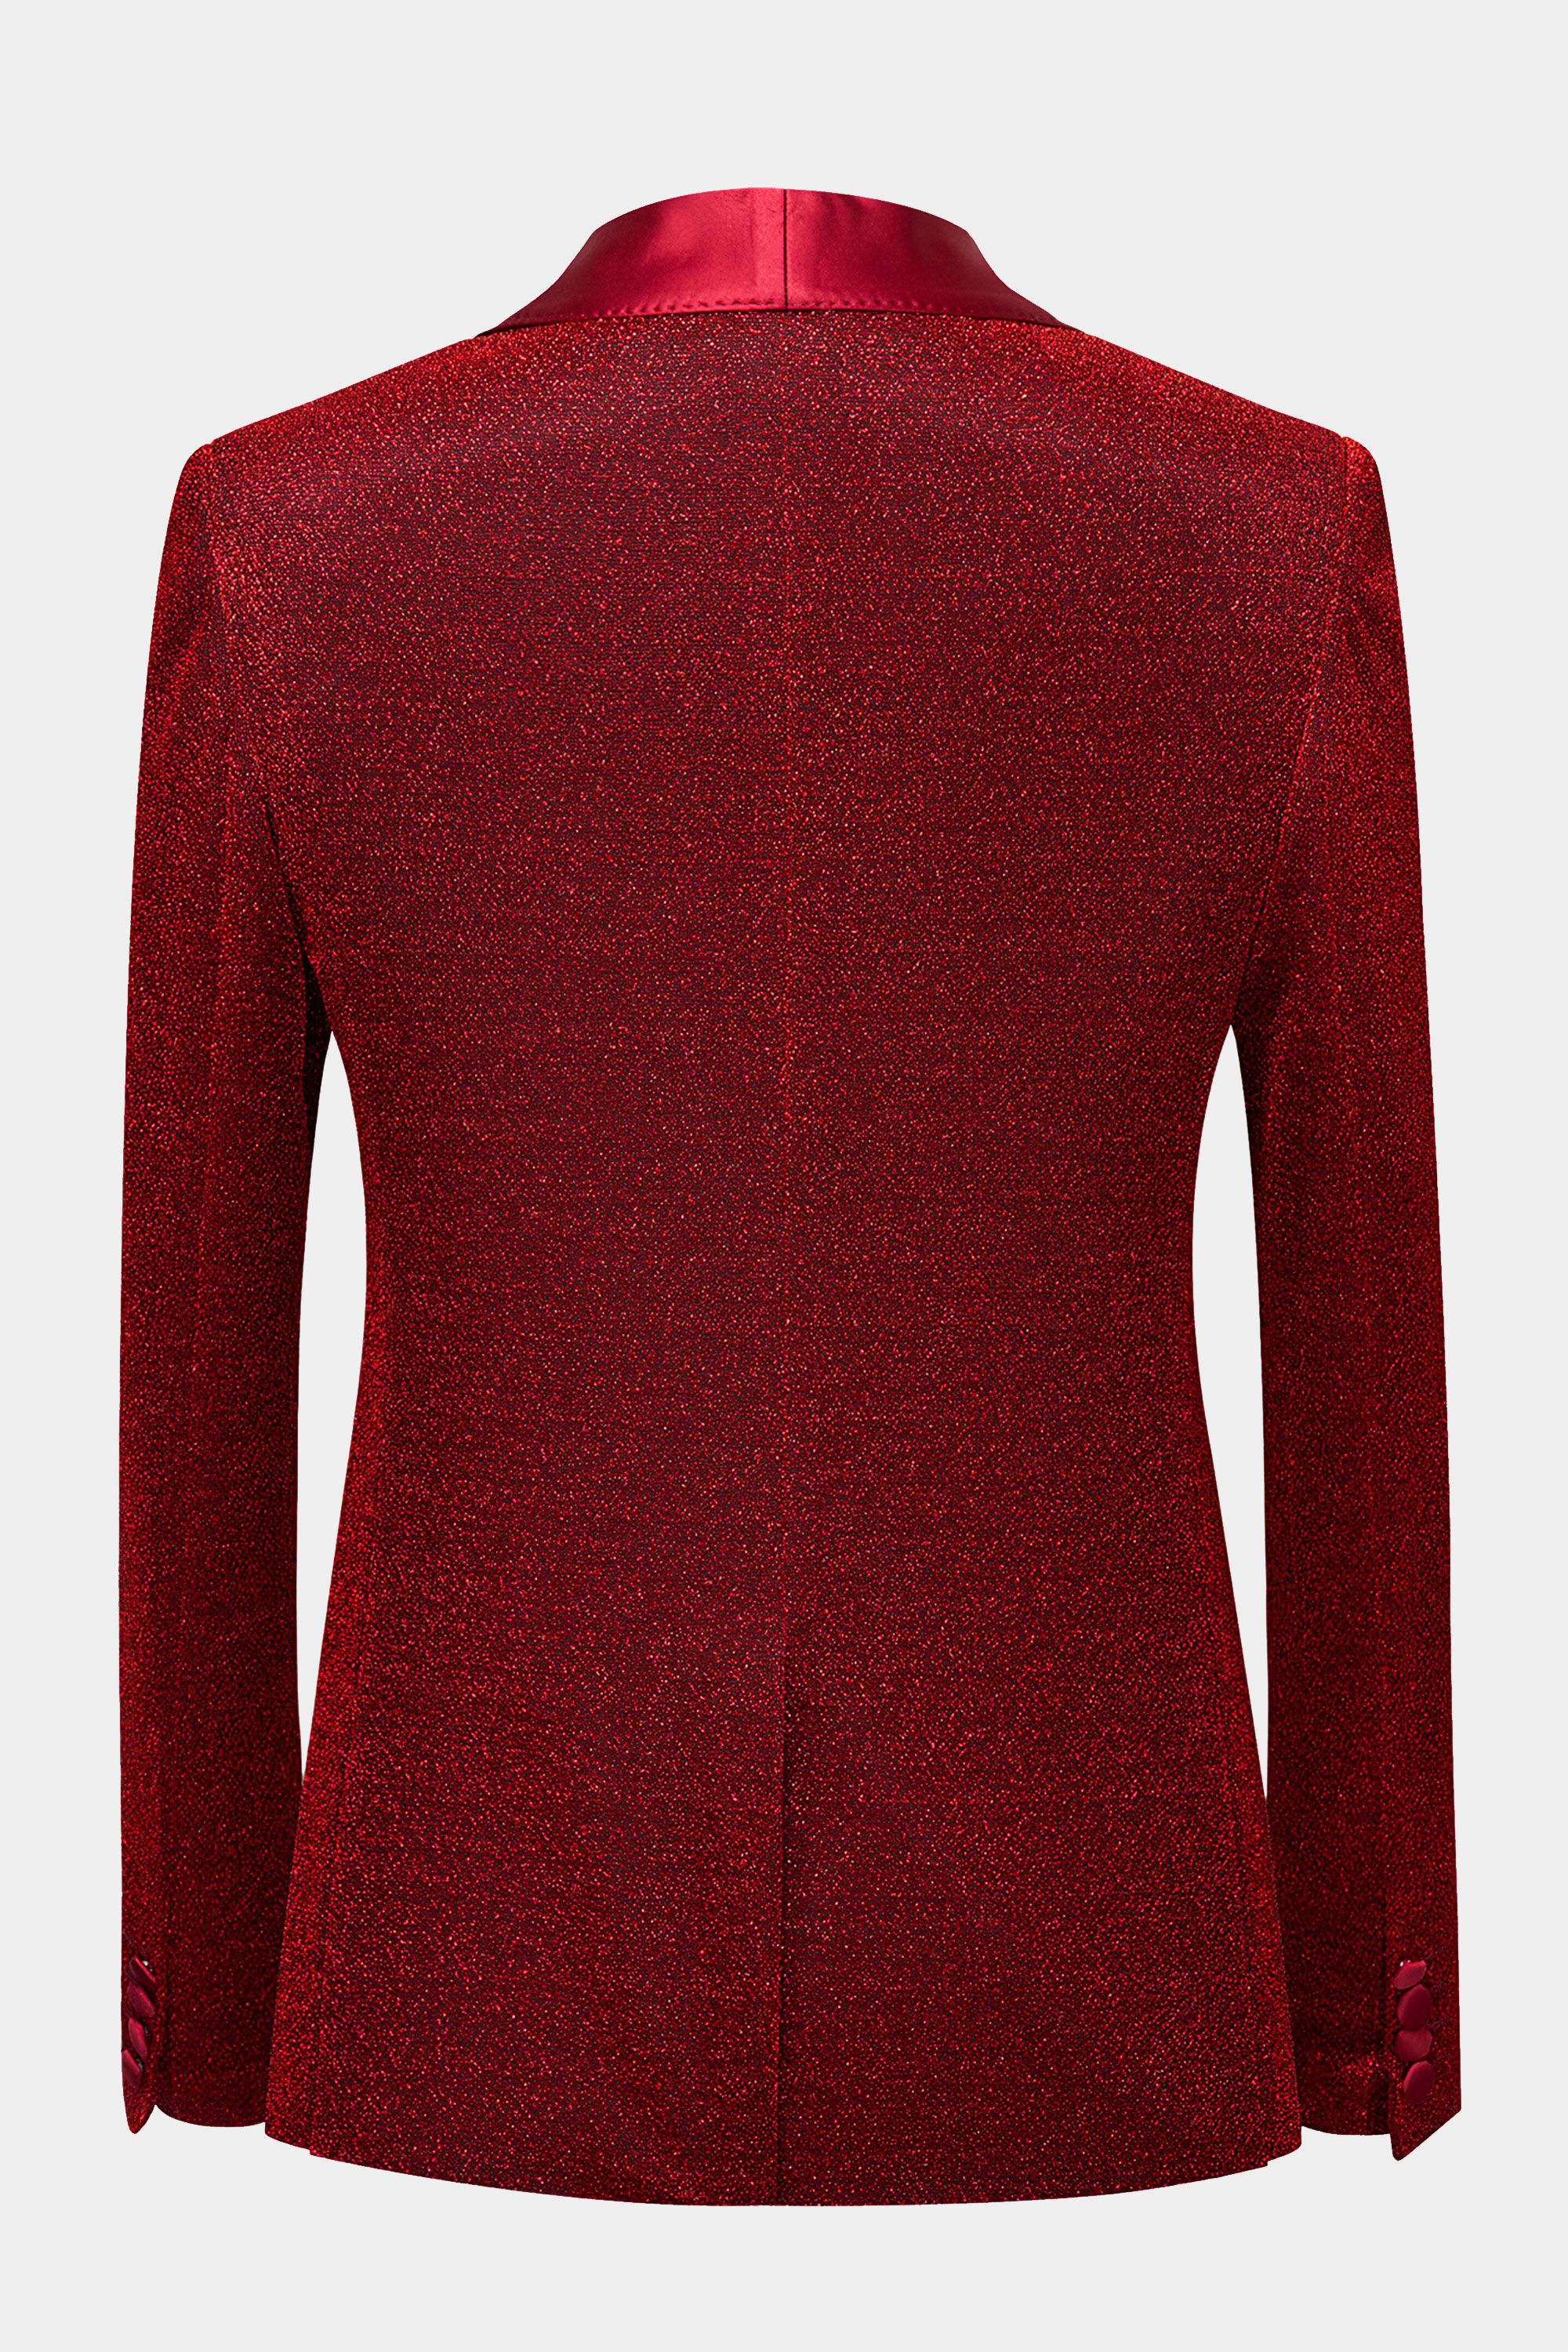 Mens-Red-Glitter-Tuxedo-Jacket-from-Gentlemansguru.com